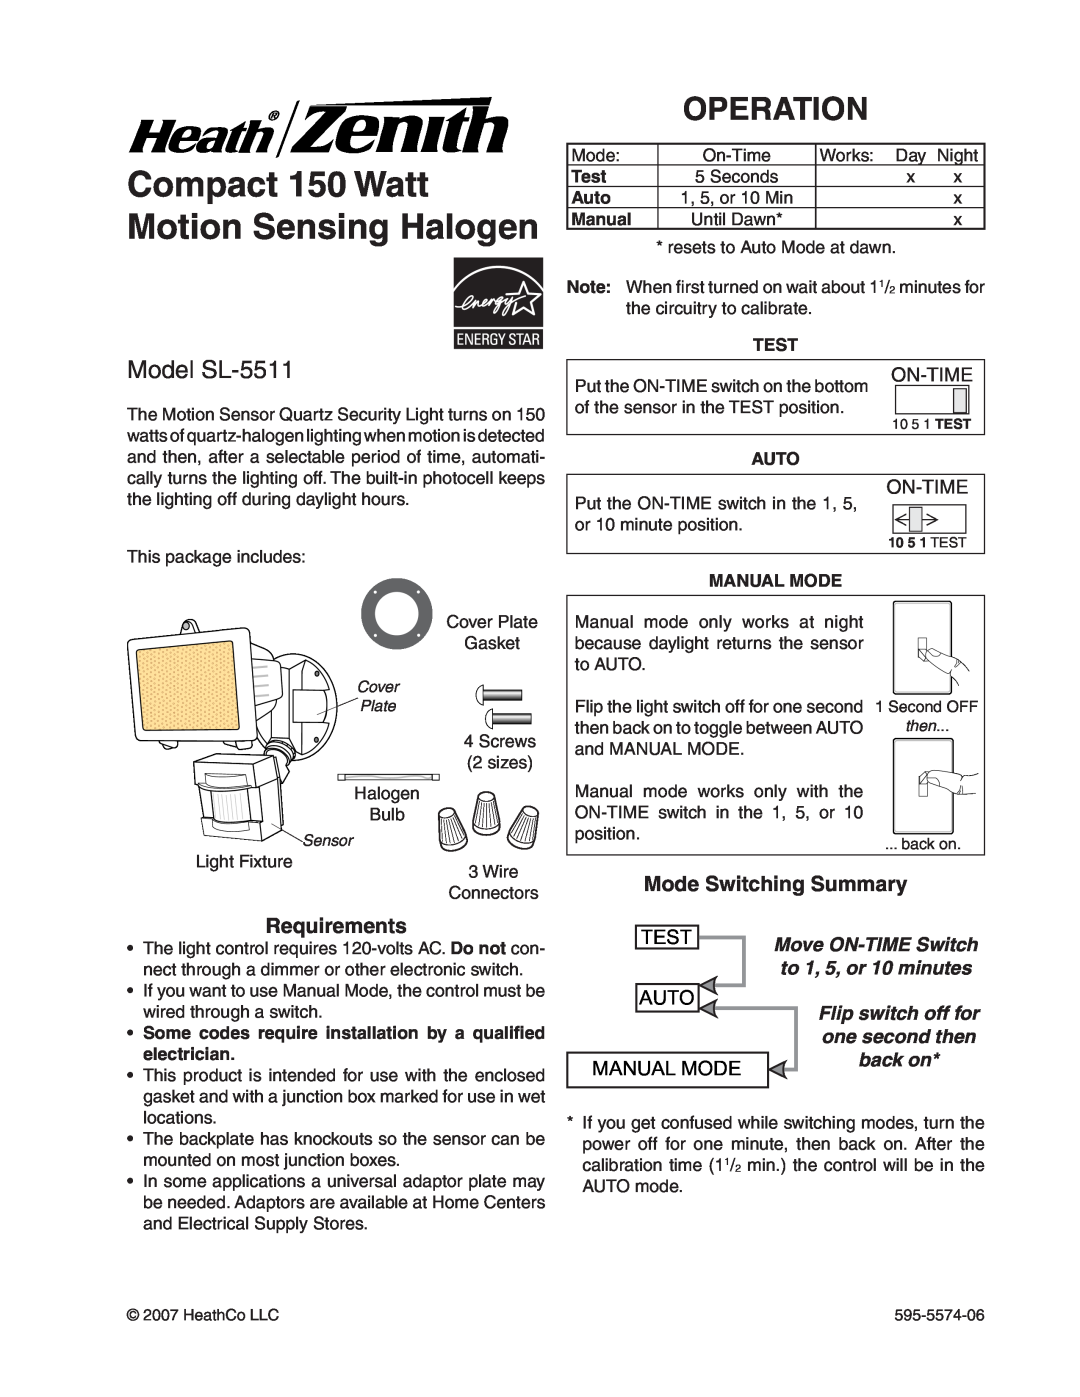 Heath Zenith manual Compact 150 Watt Motion Sensing Halogen, Operation, Model SL-5511, On-Time, Test, Auto, back on 